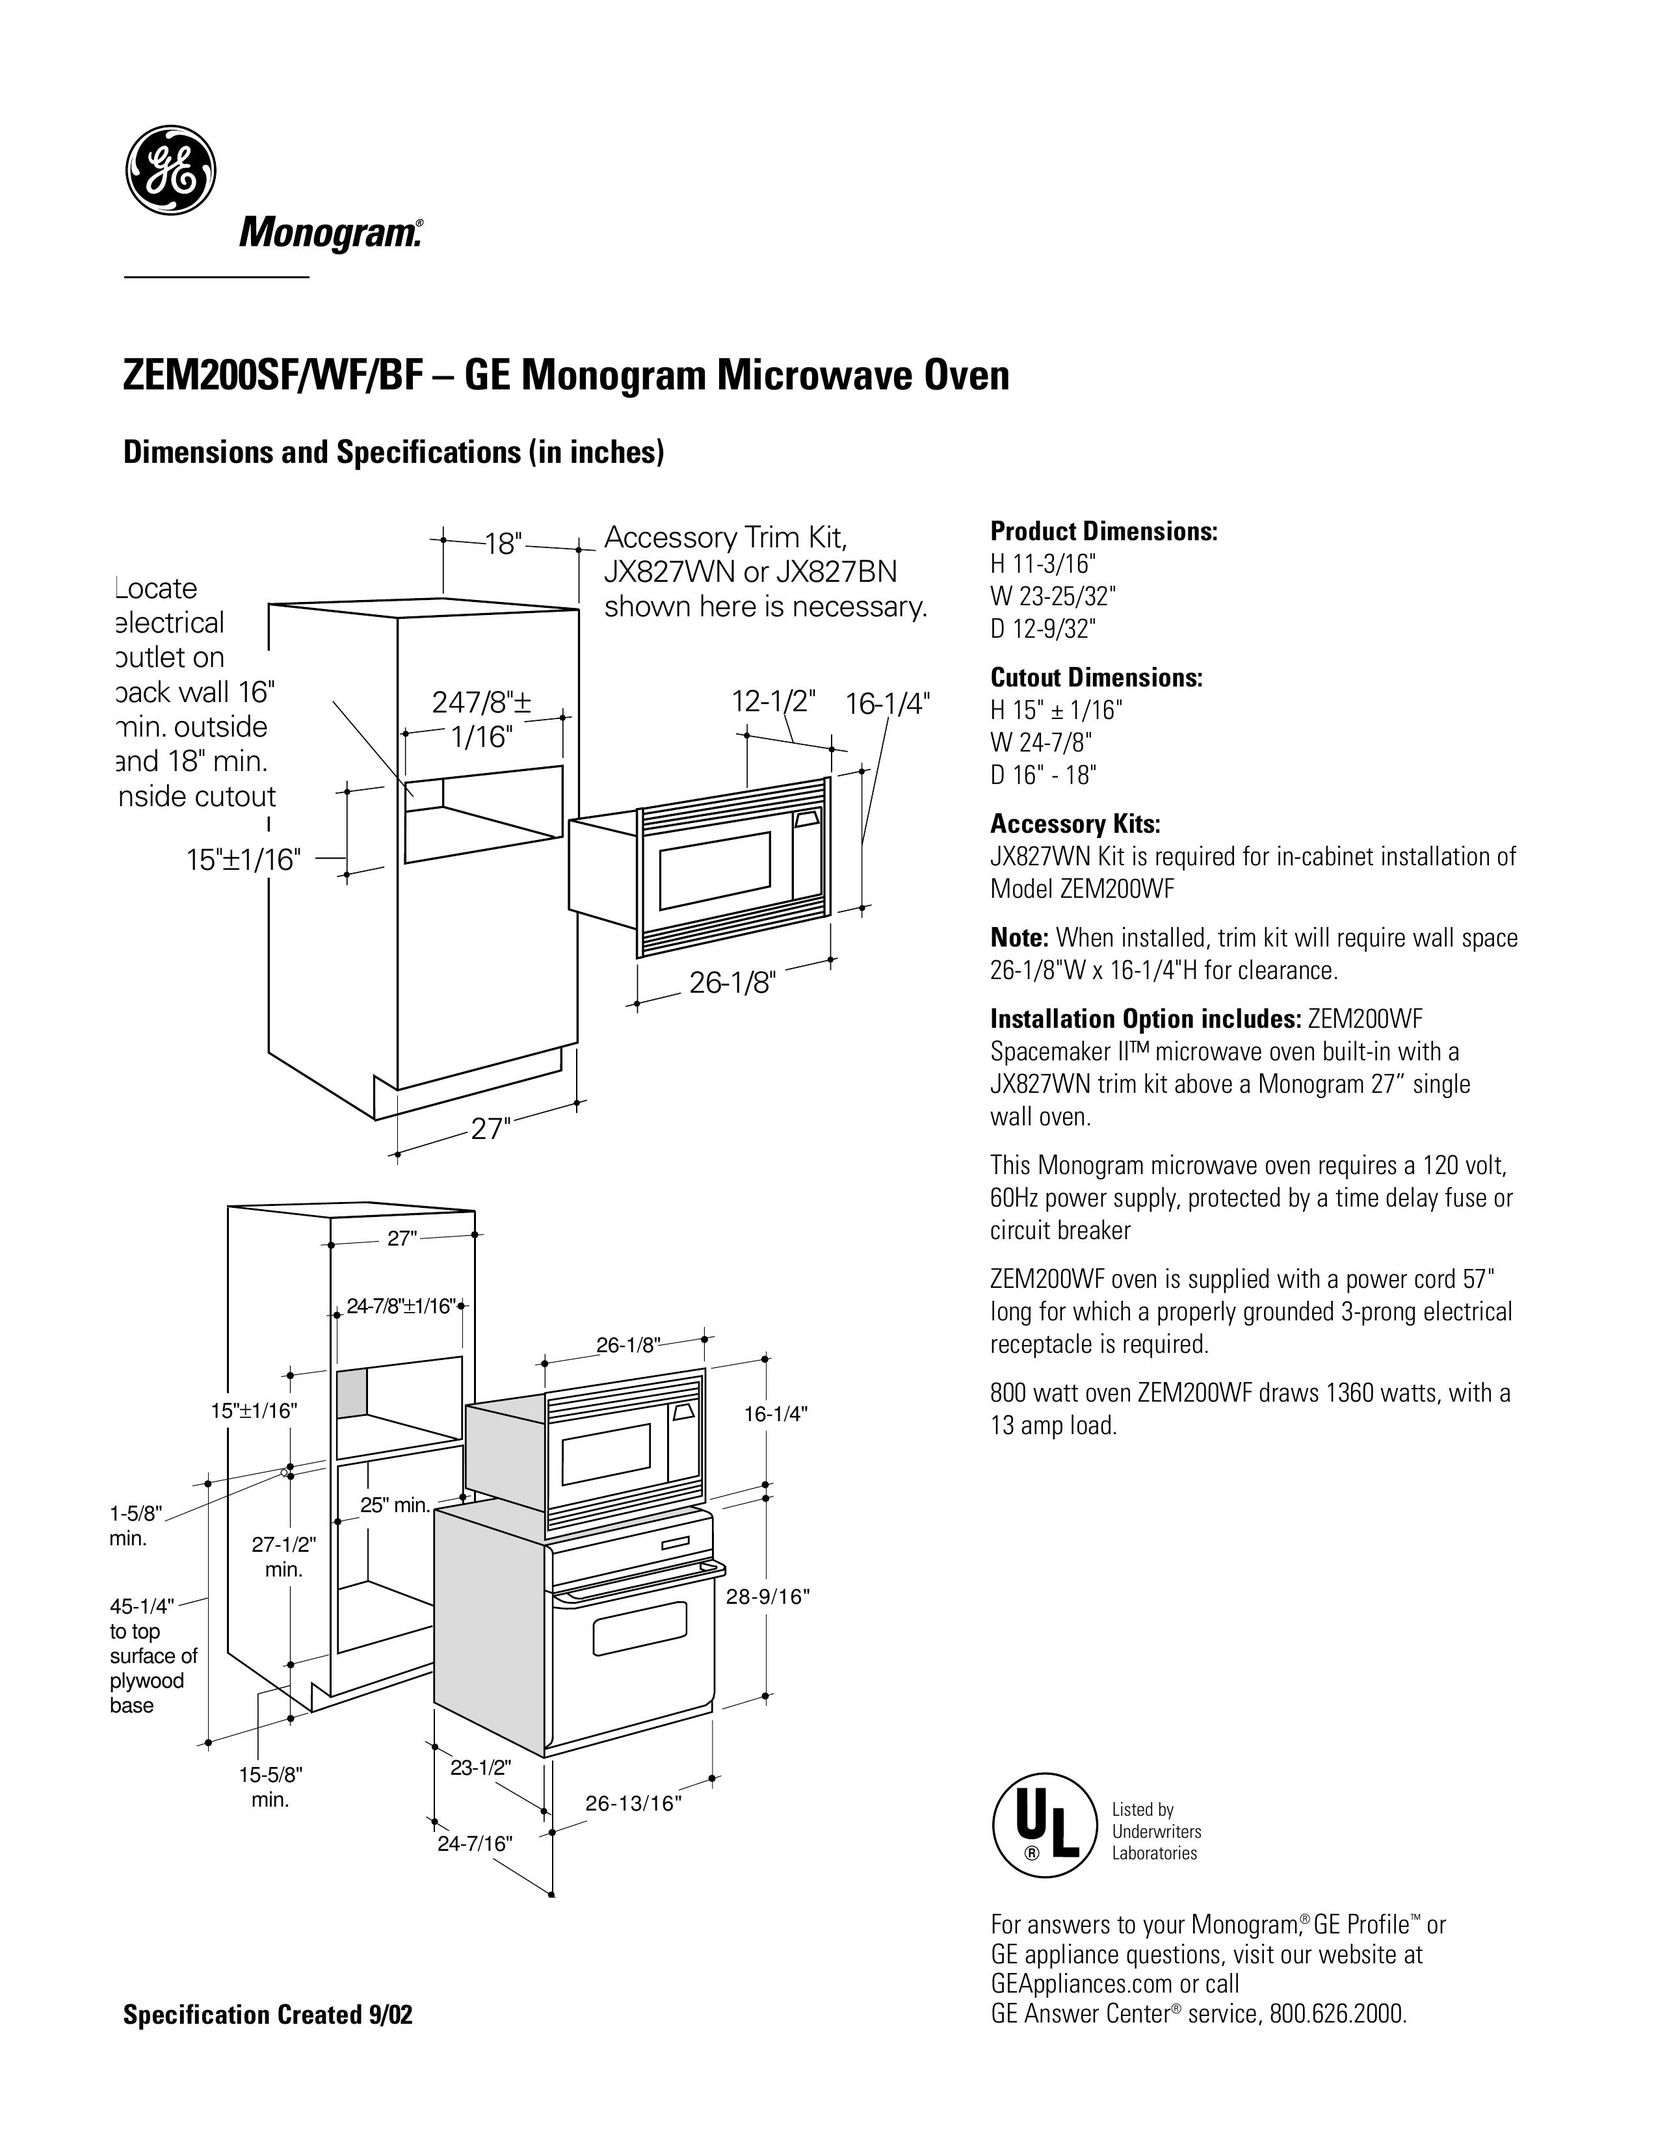 GE Monogram ZEM200WF Microwave Oven User Manual